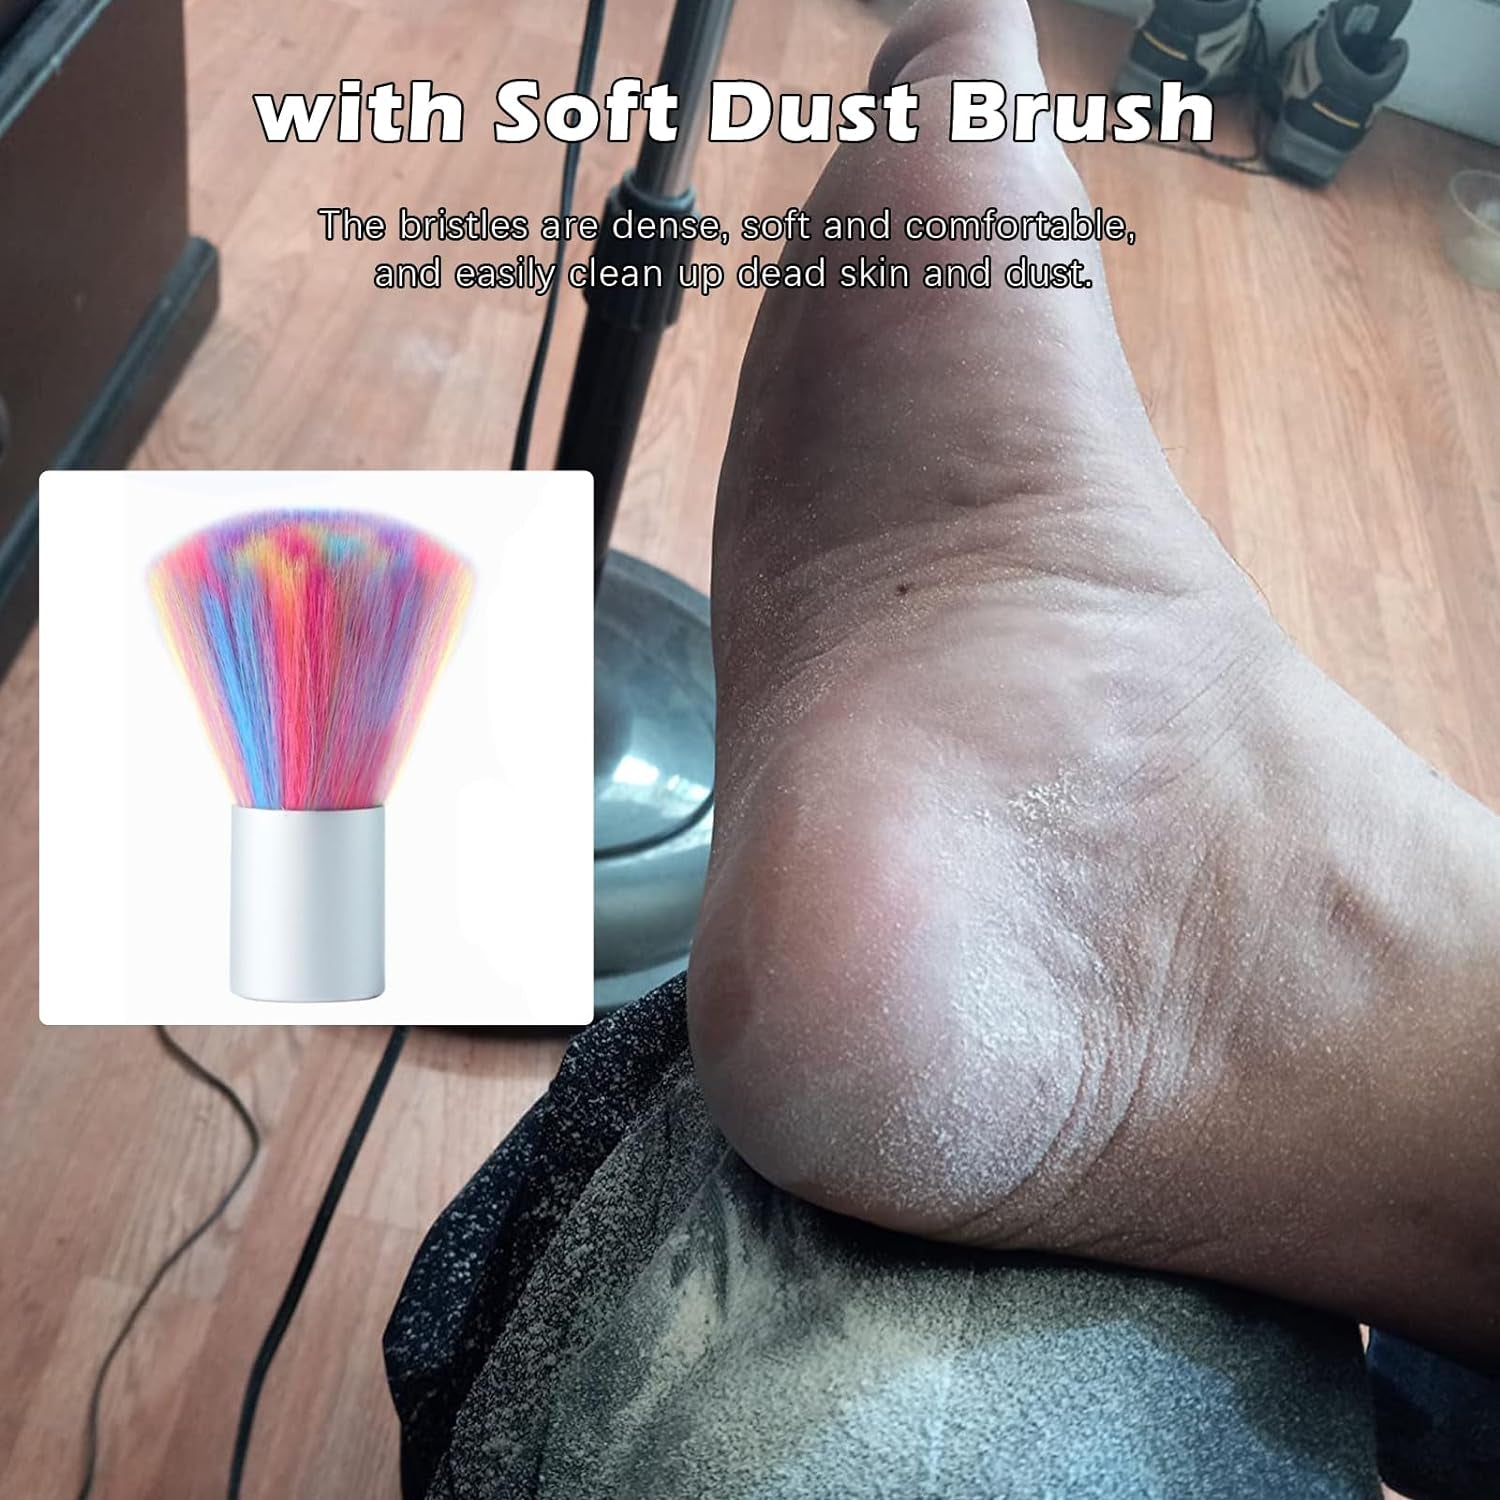 Electric Callus Remover for Feet, Professional Electric Foot Sander Grinder Scrubber Foot File Pedicure Heel Tool for Cracked Dry Dead Skin, Adjustable Speed, 60 Sandpaper Discs, Black